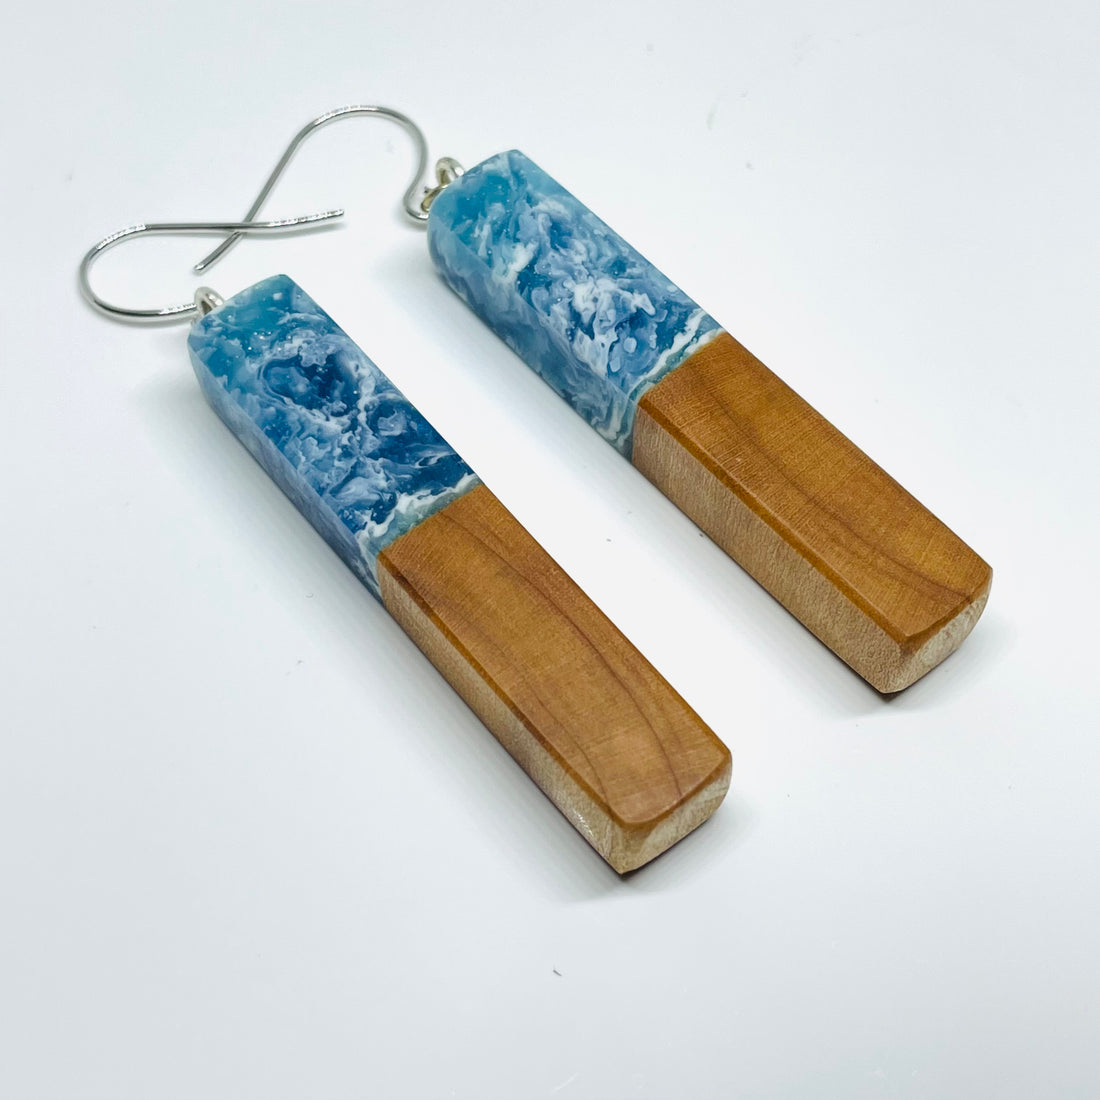 handmade jewelry, Minnesota local wood and resin artist. Ocean waves blue resin with maple wood, nickel free dangle earrings